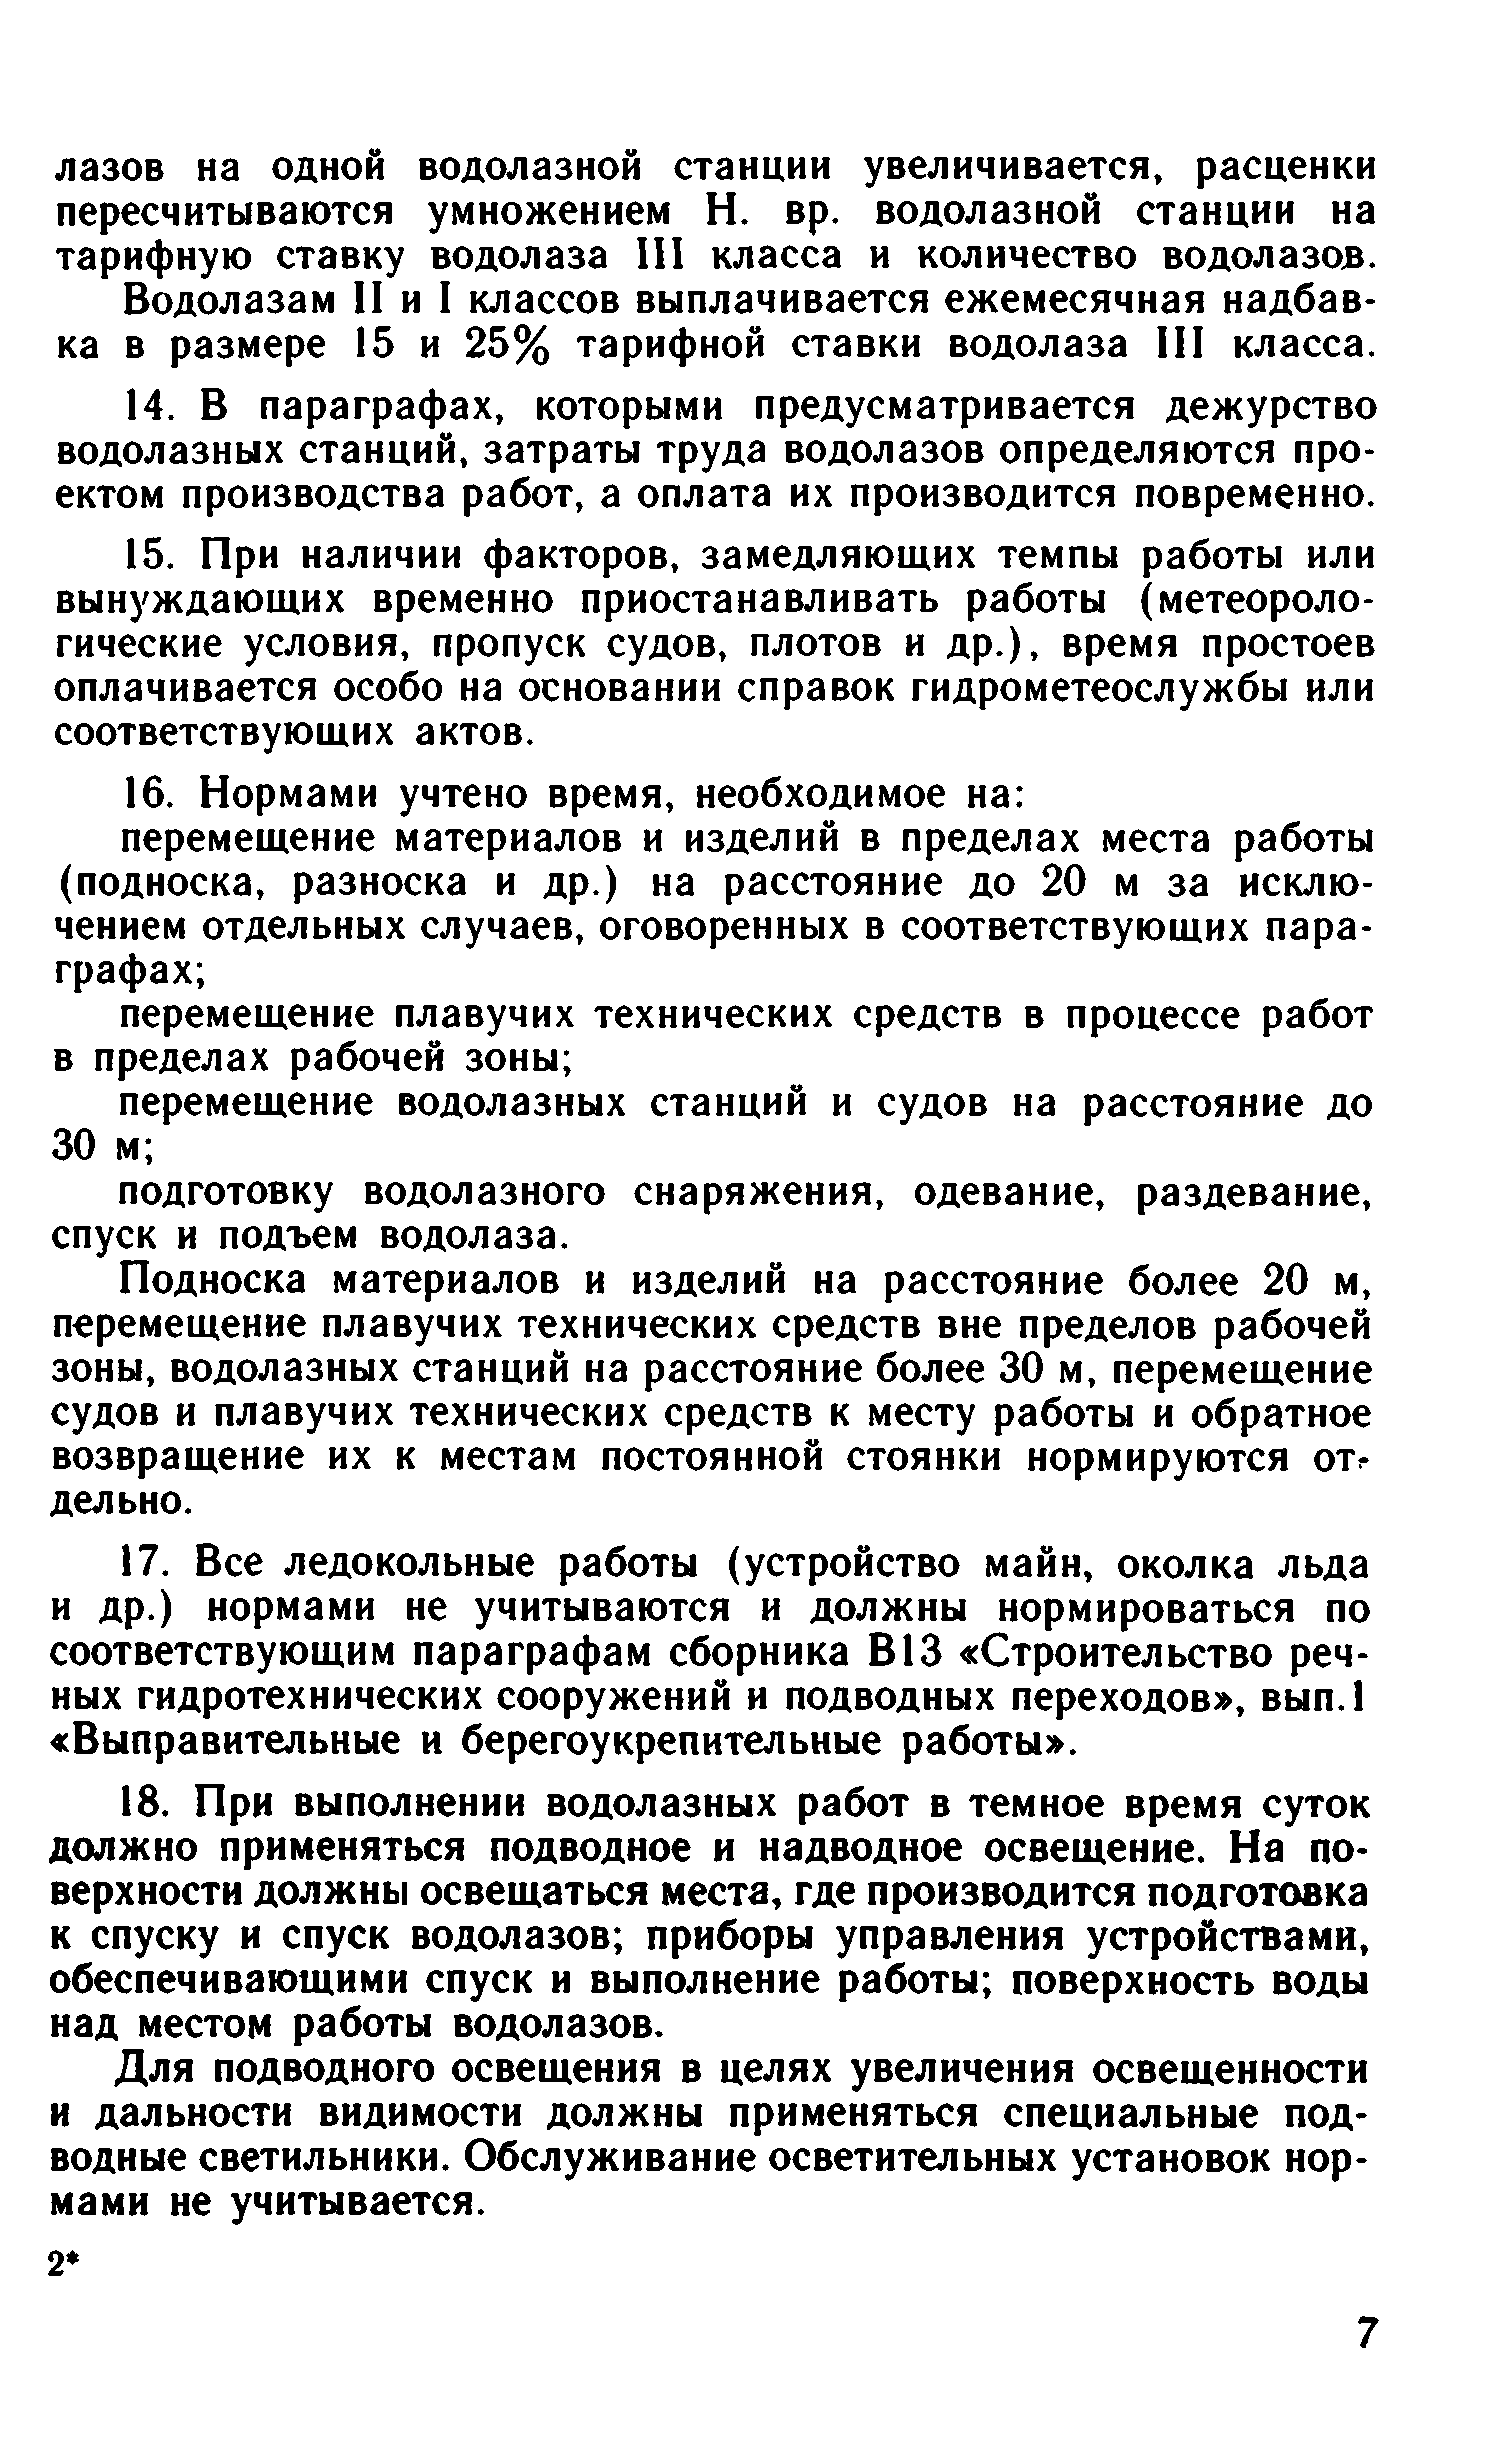 ВНиР В13-2